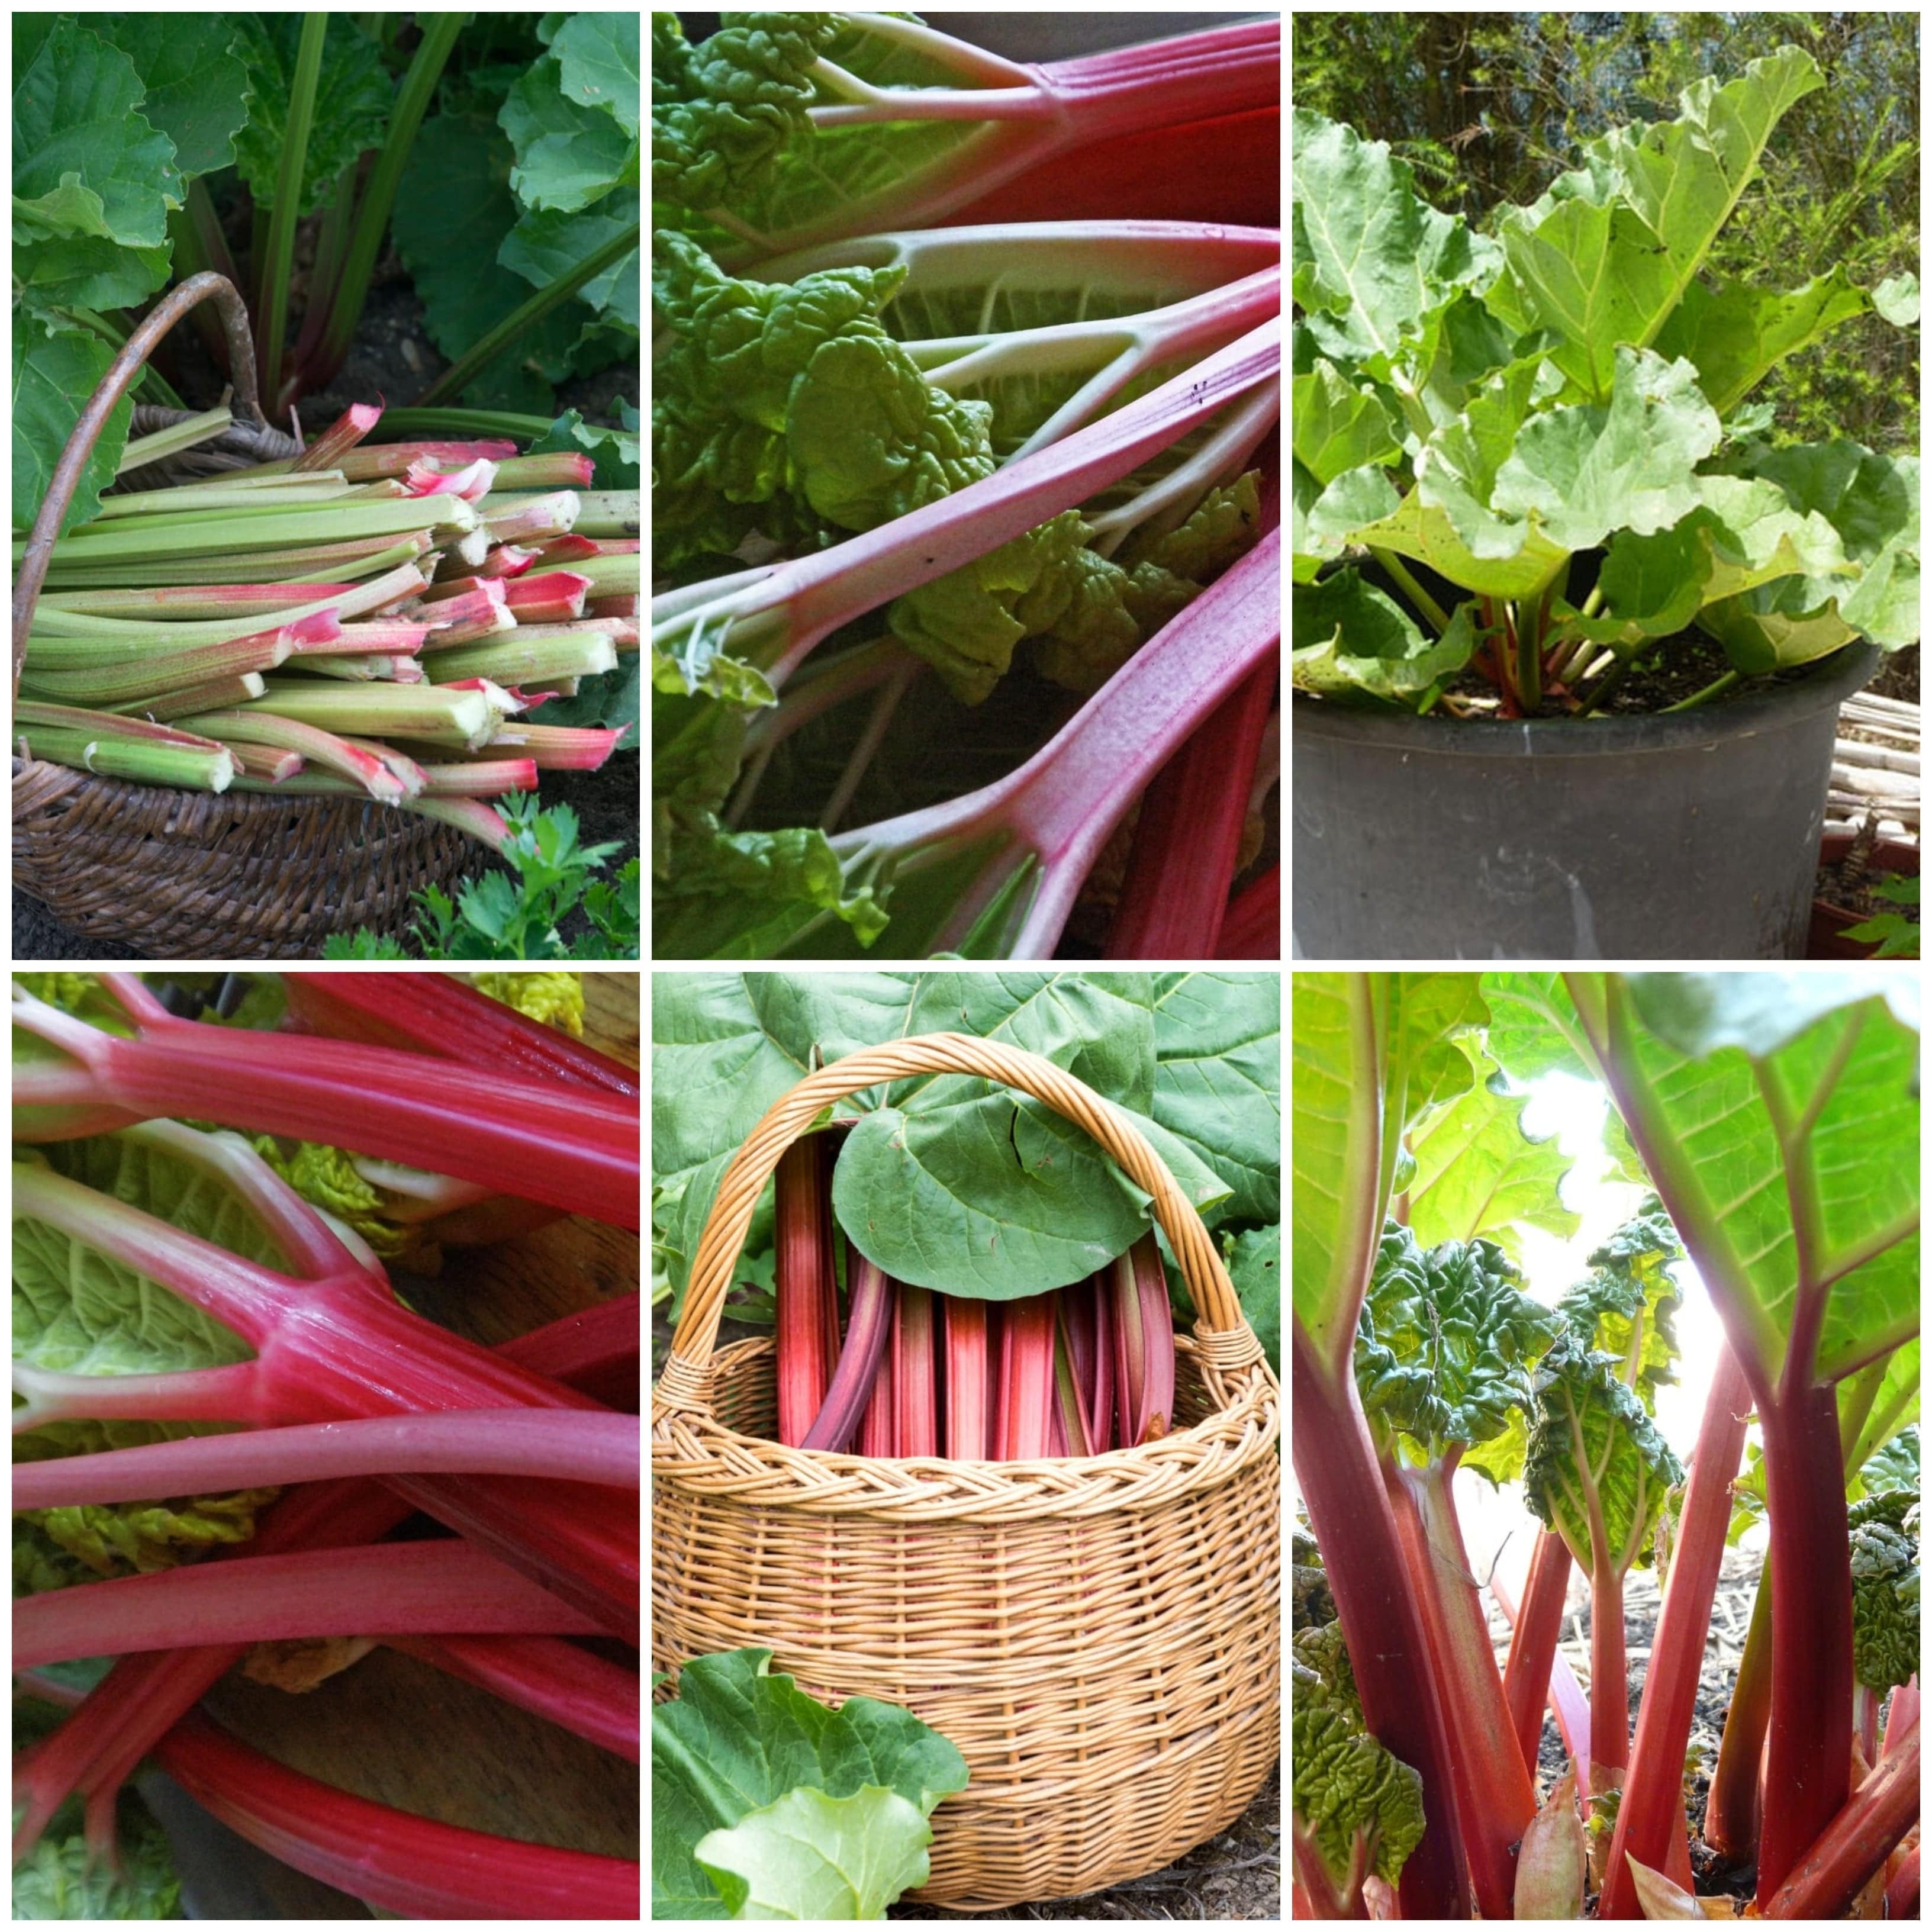 Full Season Rhubarb Collection - Roots Plants